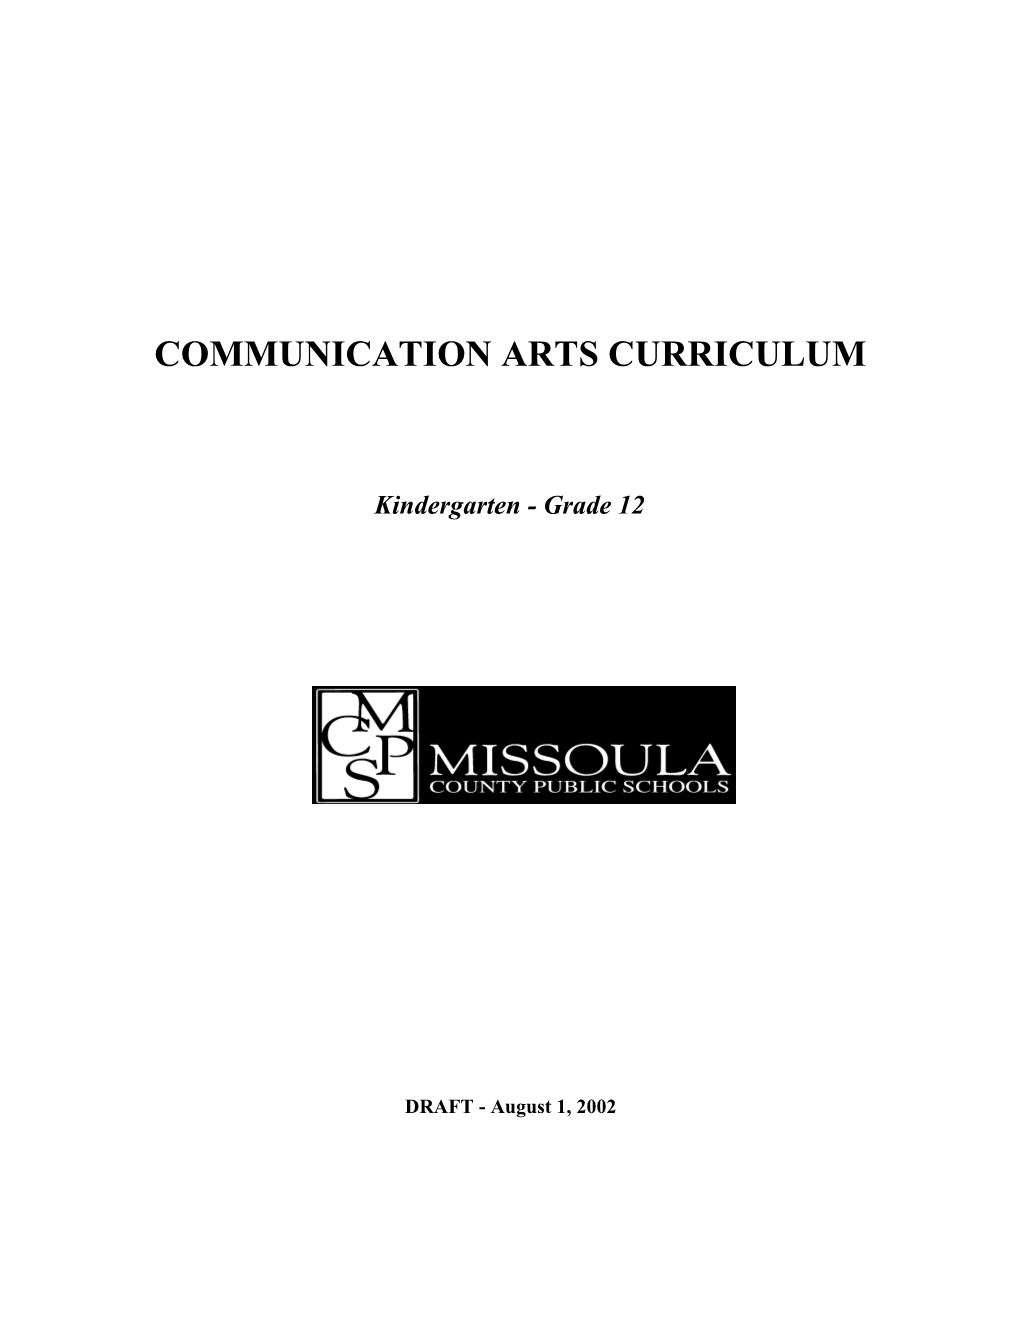 Communication Arts Curriculum